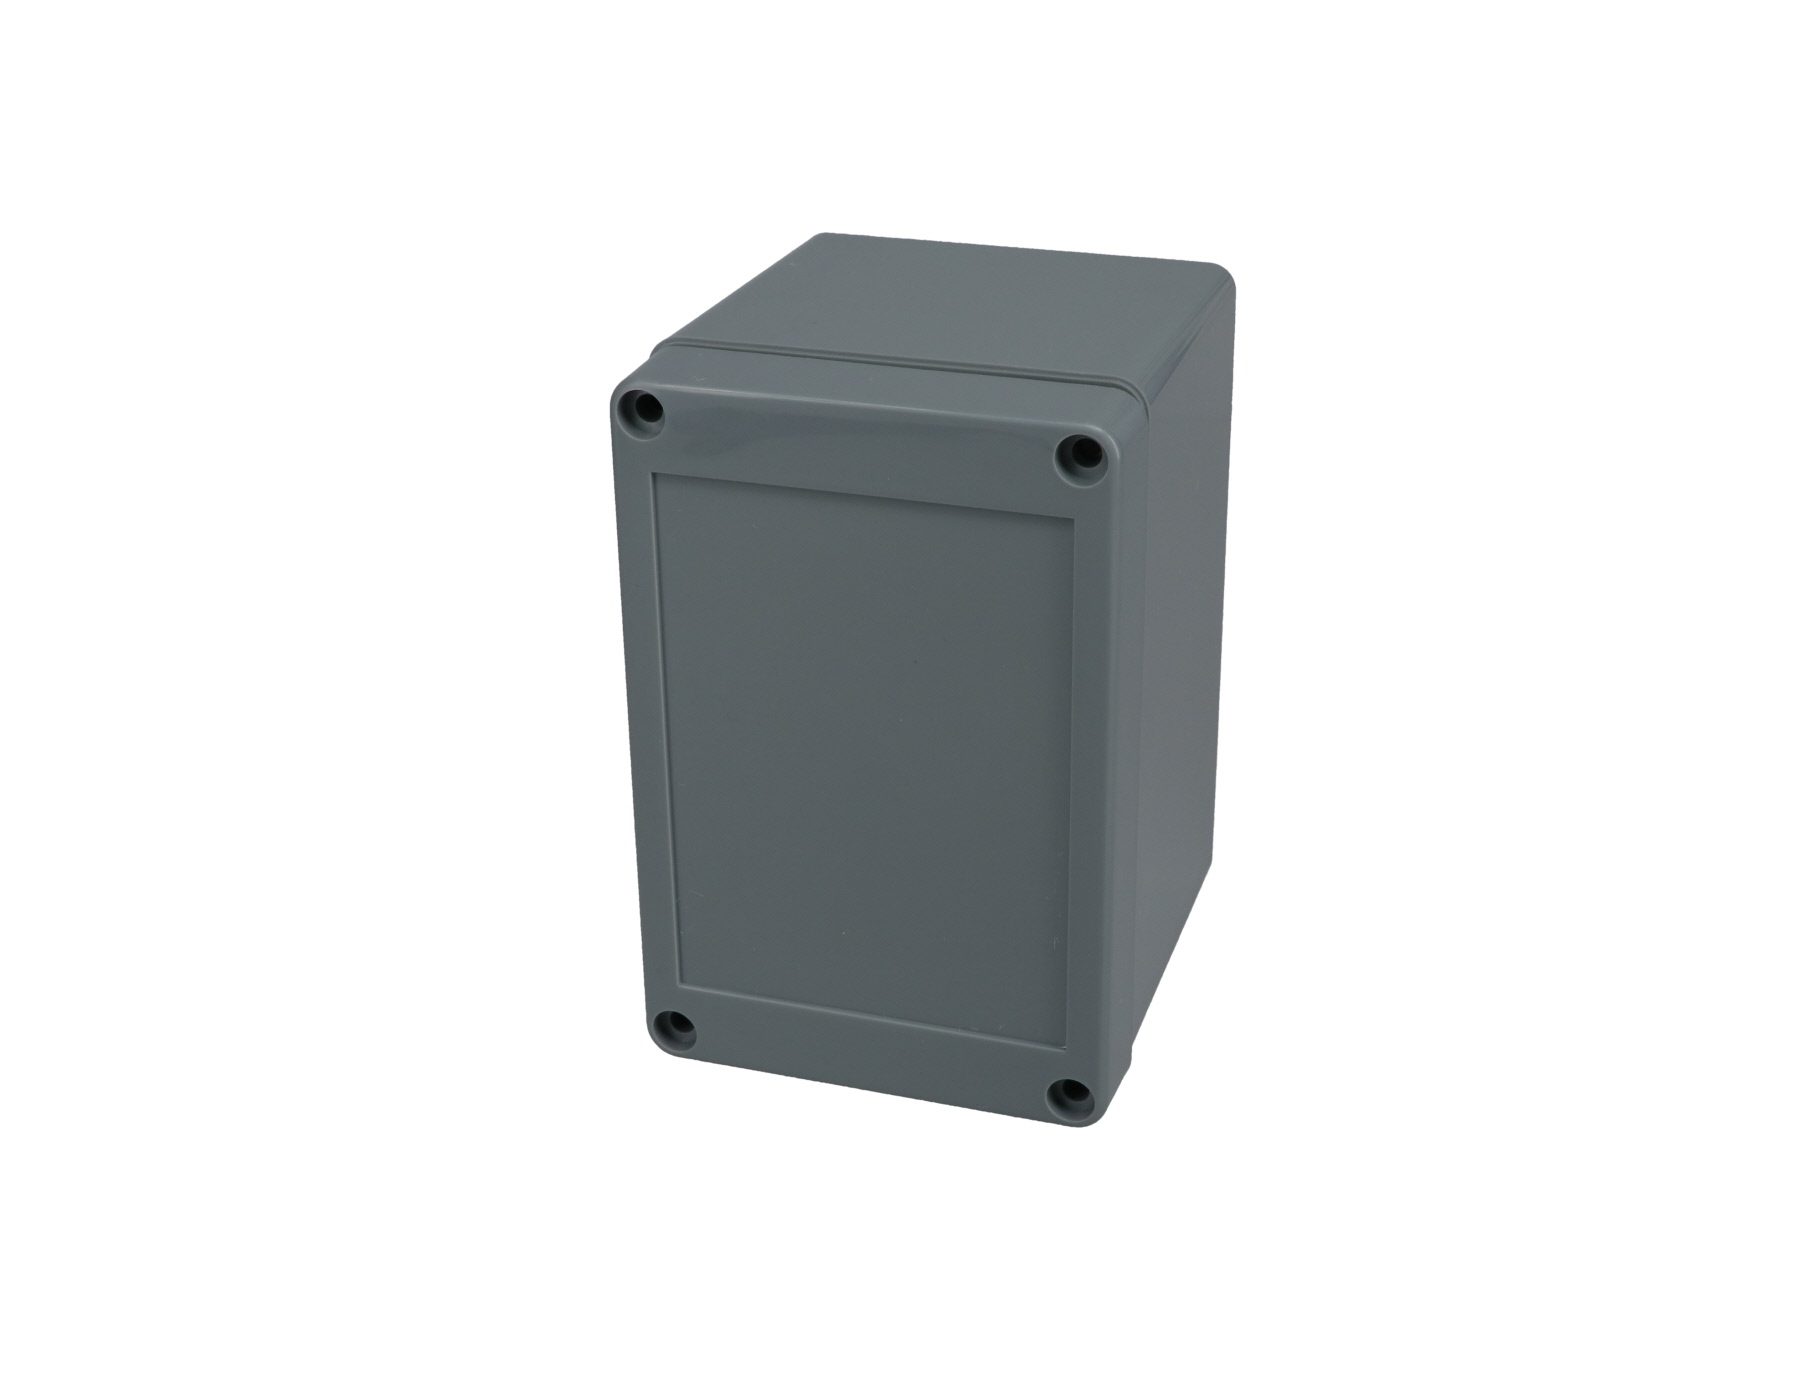 NEMA Box with Recessed Cover Dark Gray PNR-2603-DG